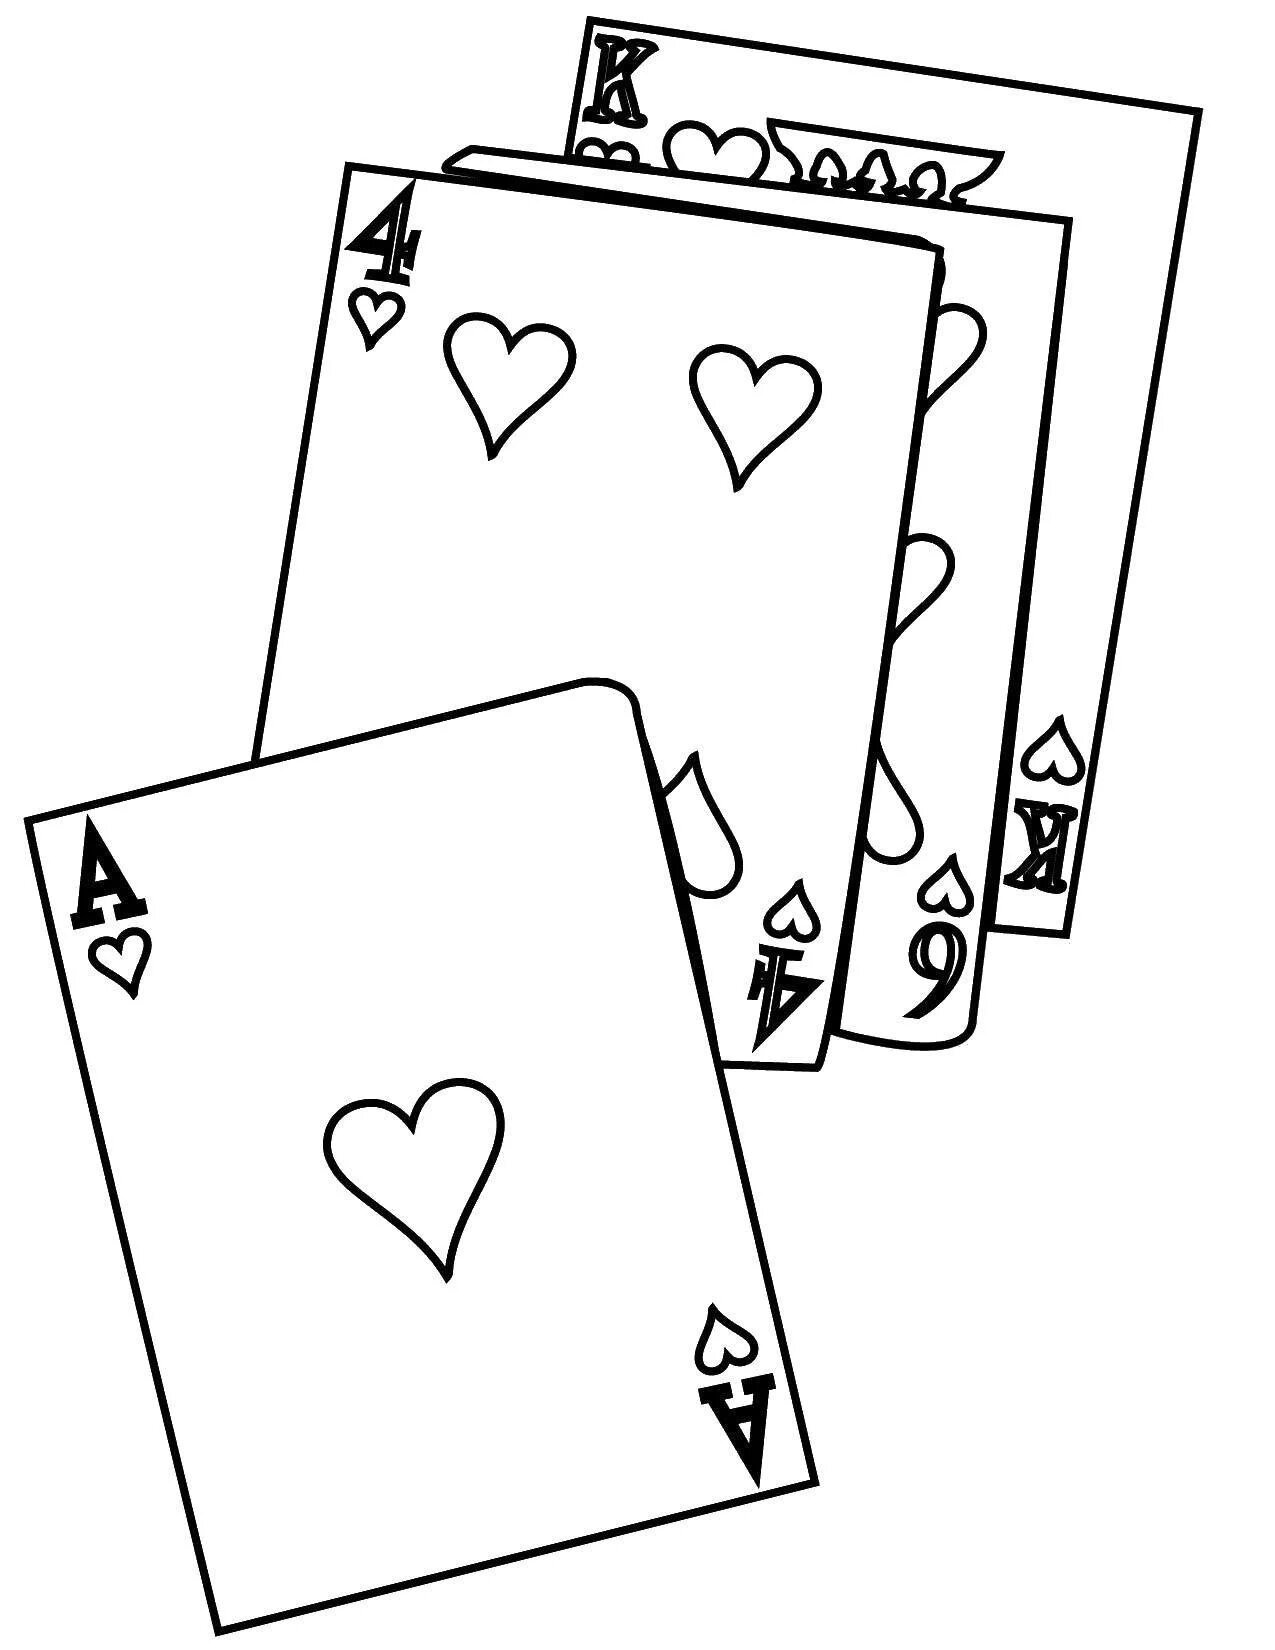 12 cards #2